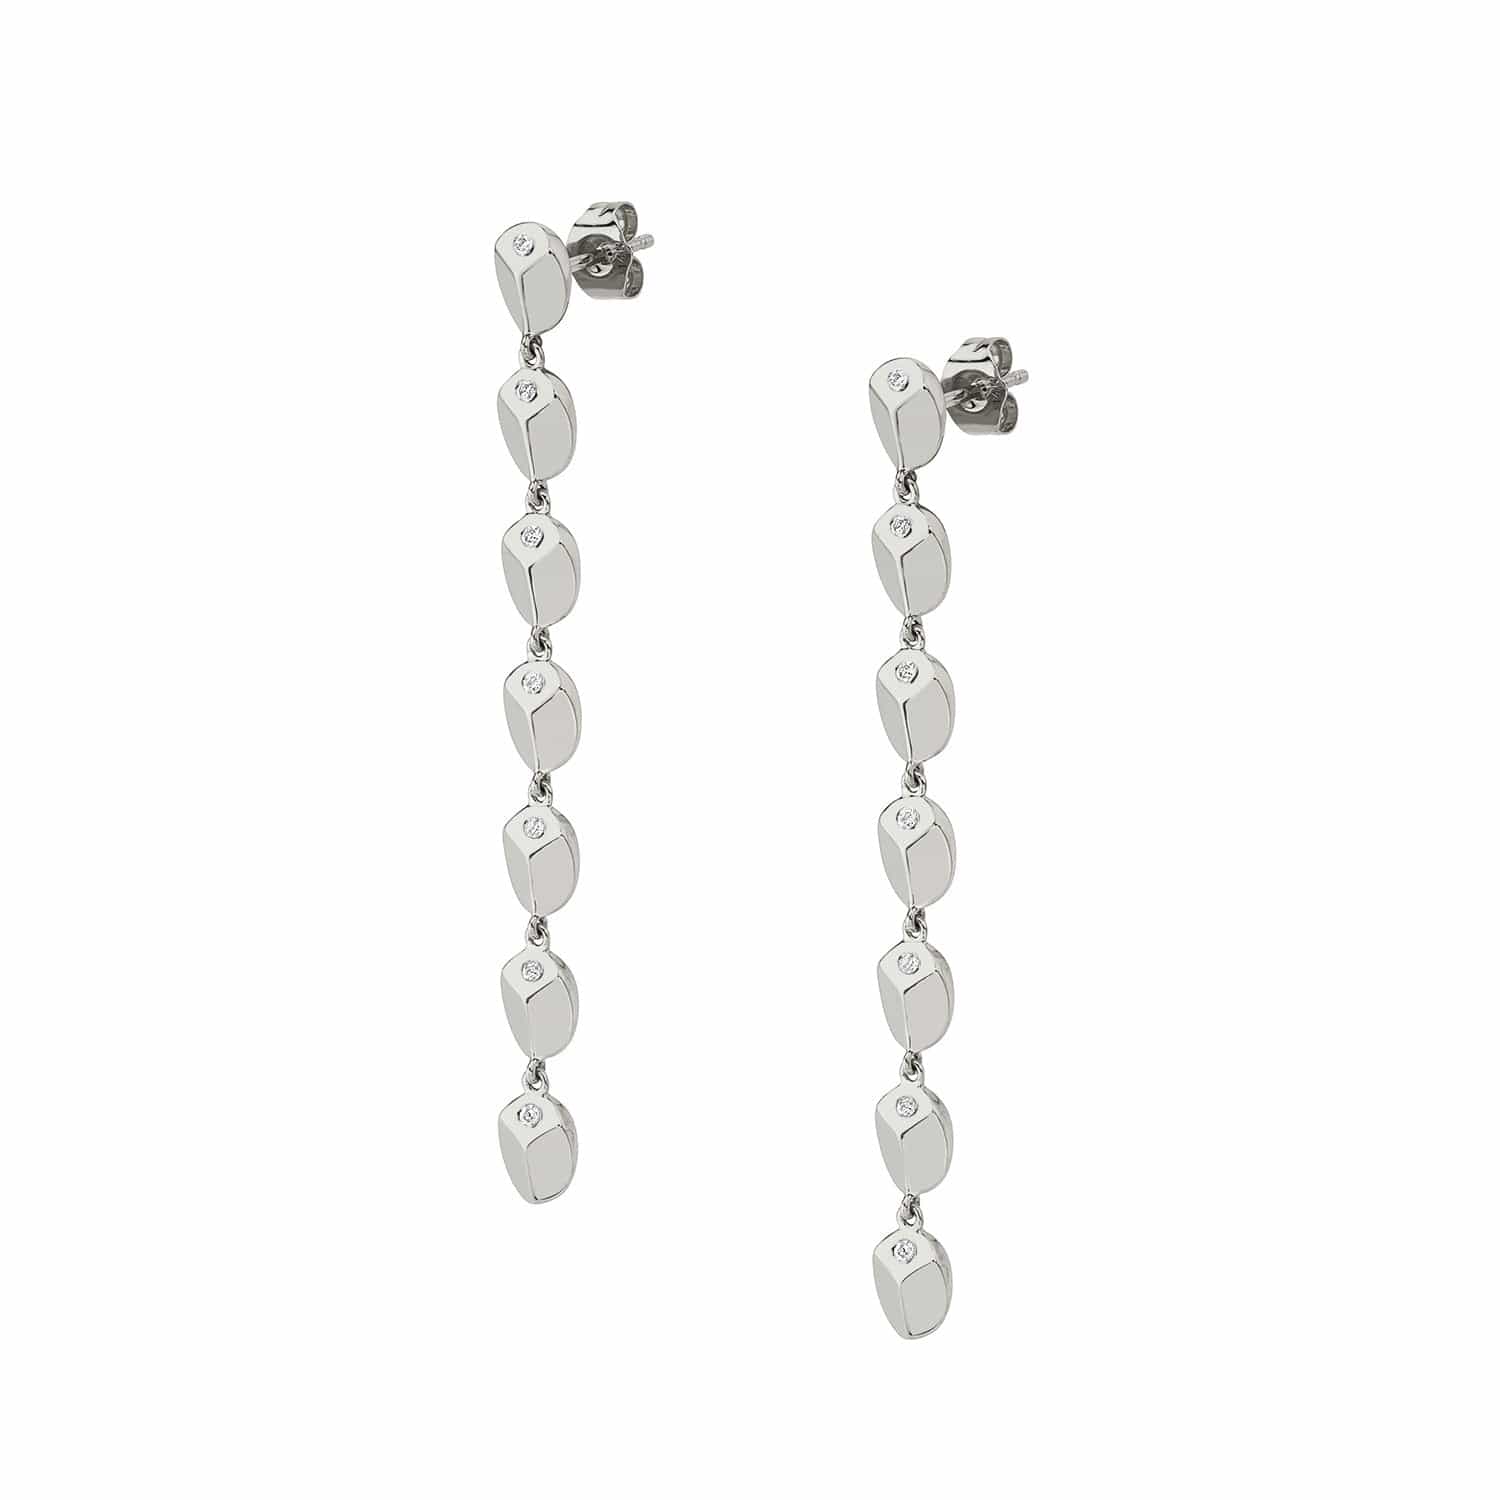 MICHAEL M Earrings 14K White Gold Carve Drop Earrings with Diamonds ER460WG